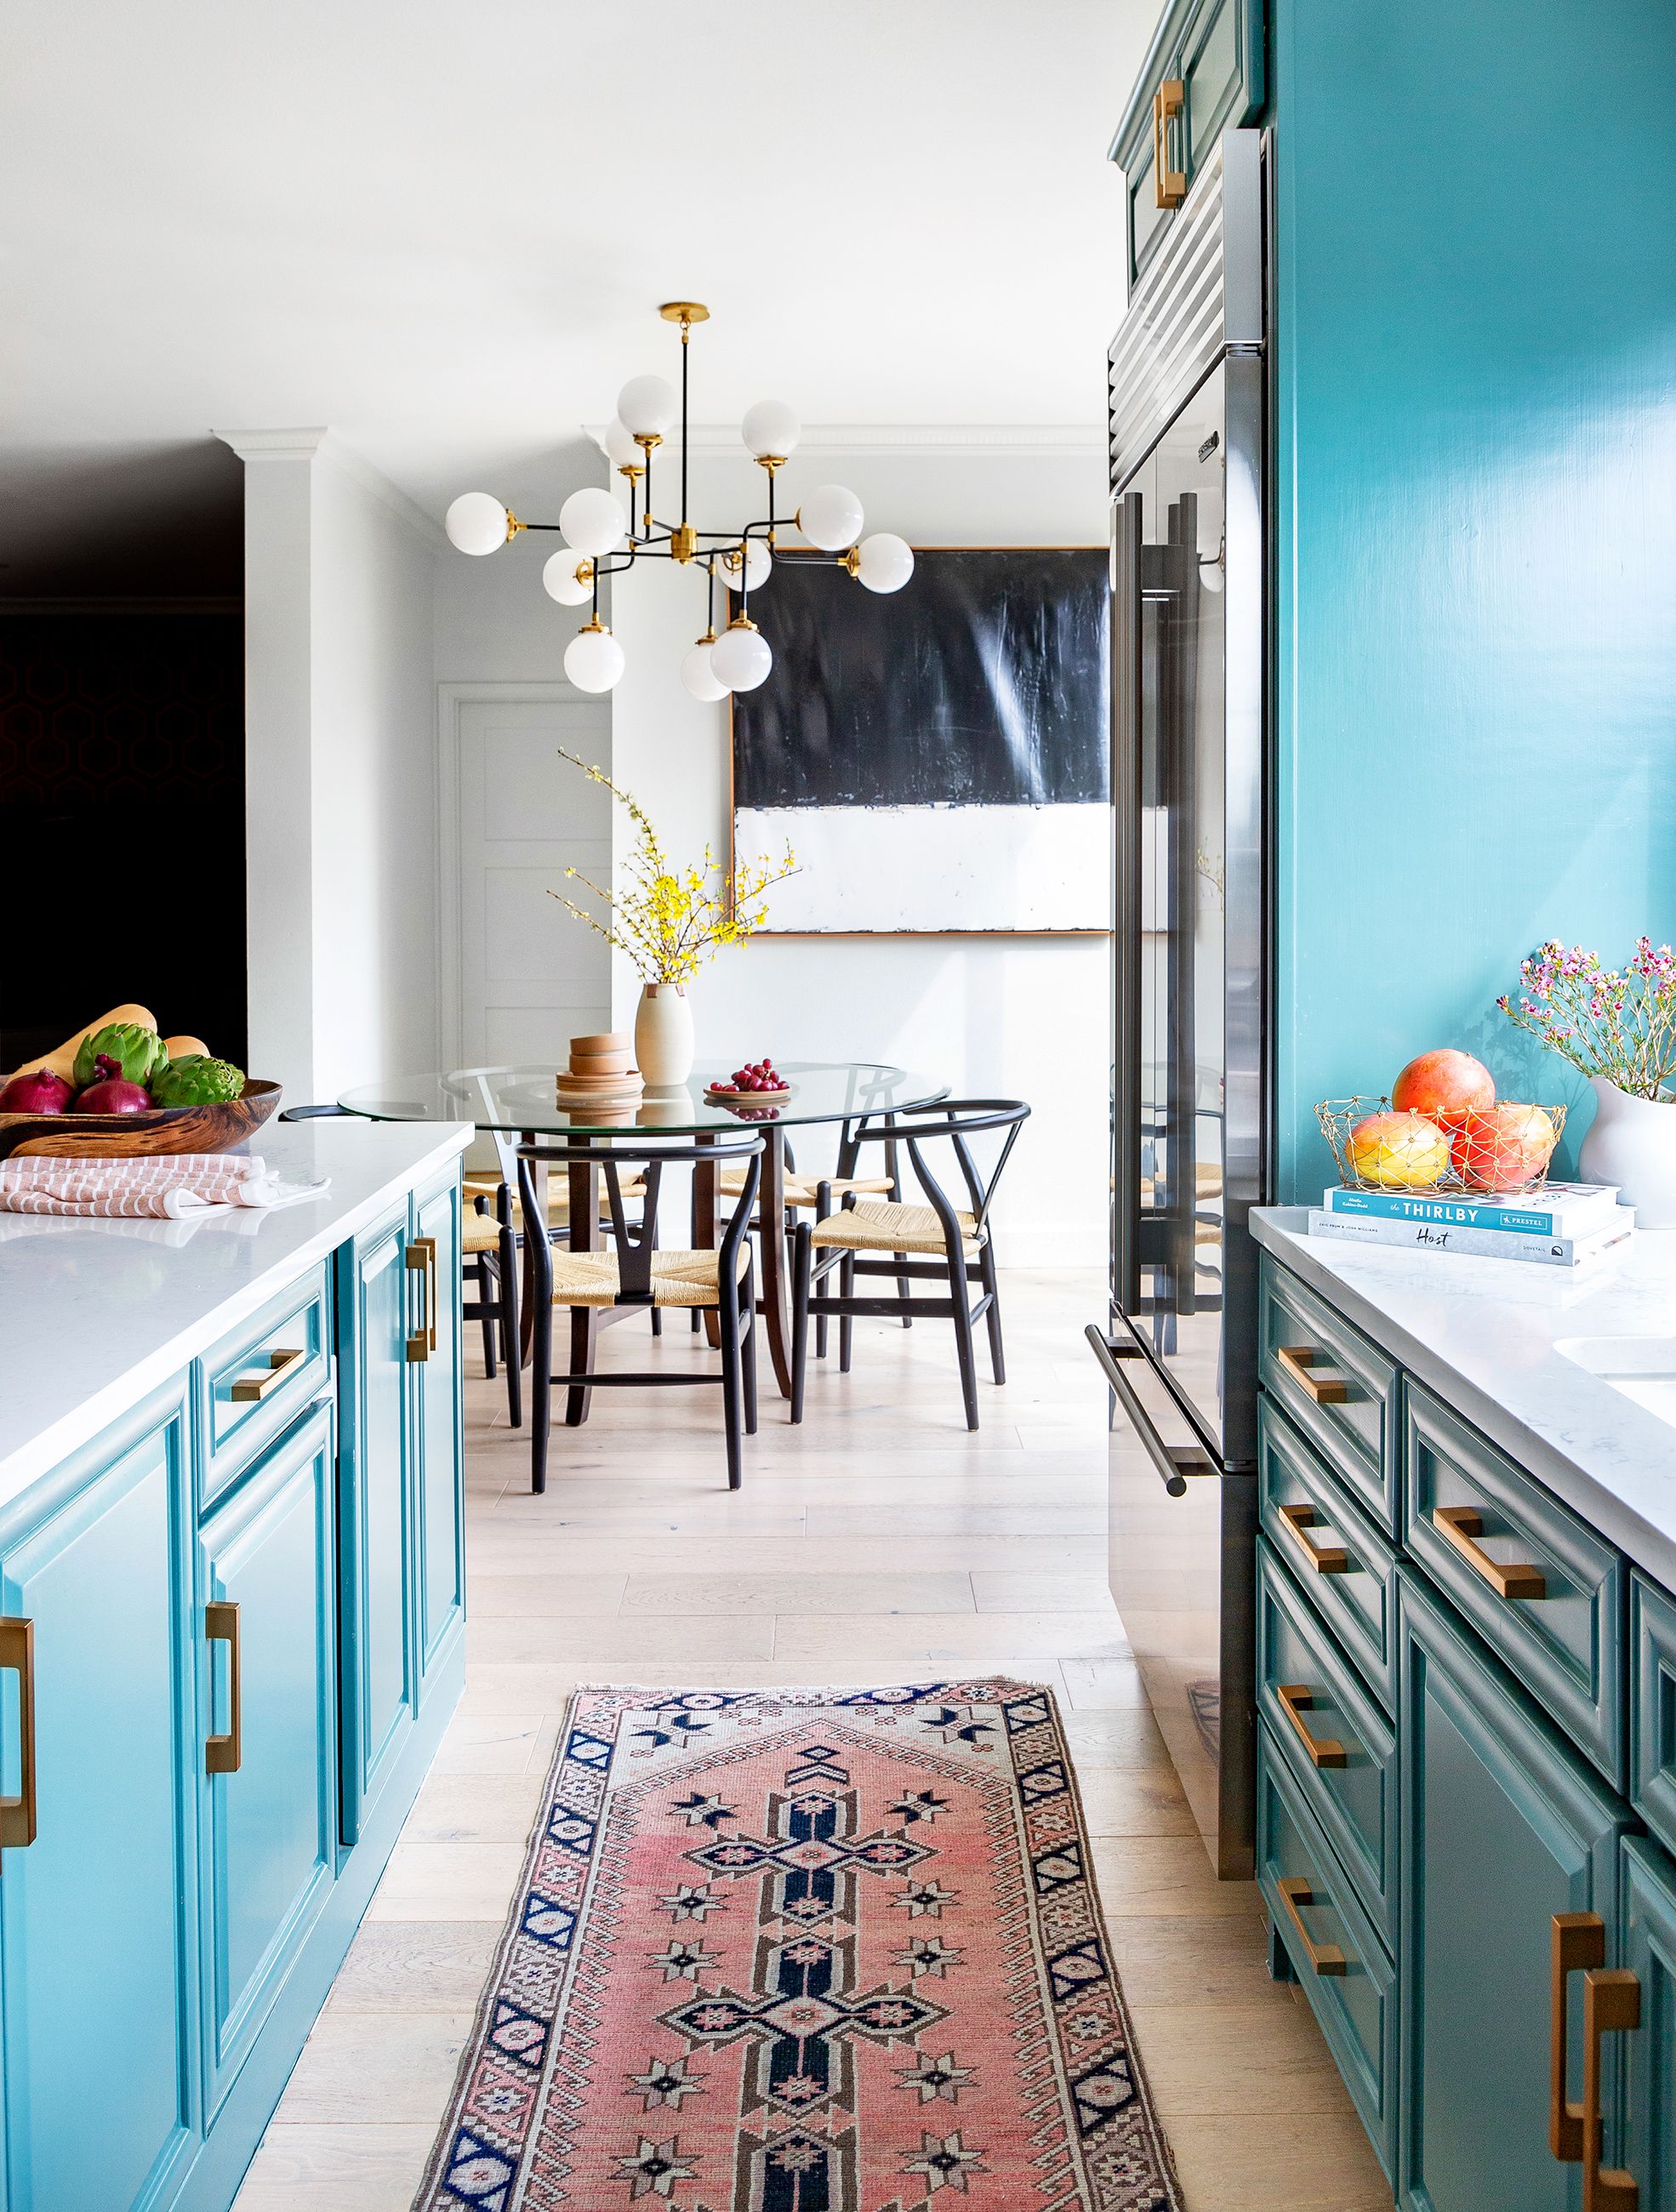 Blue Kitchen Cabinet Ideas, Image Gallery